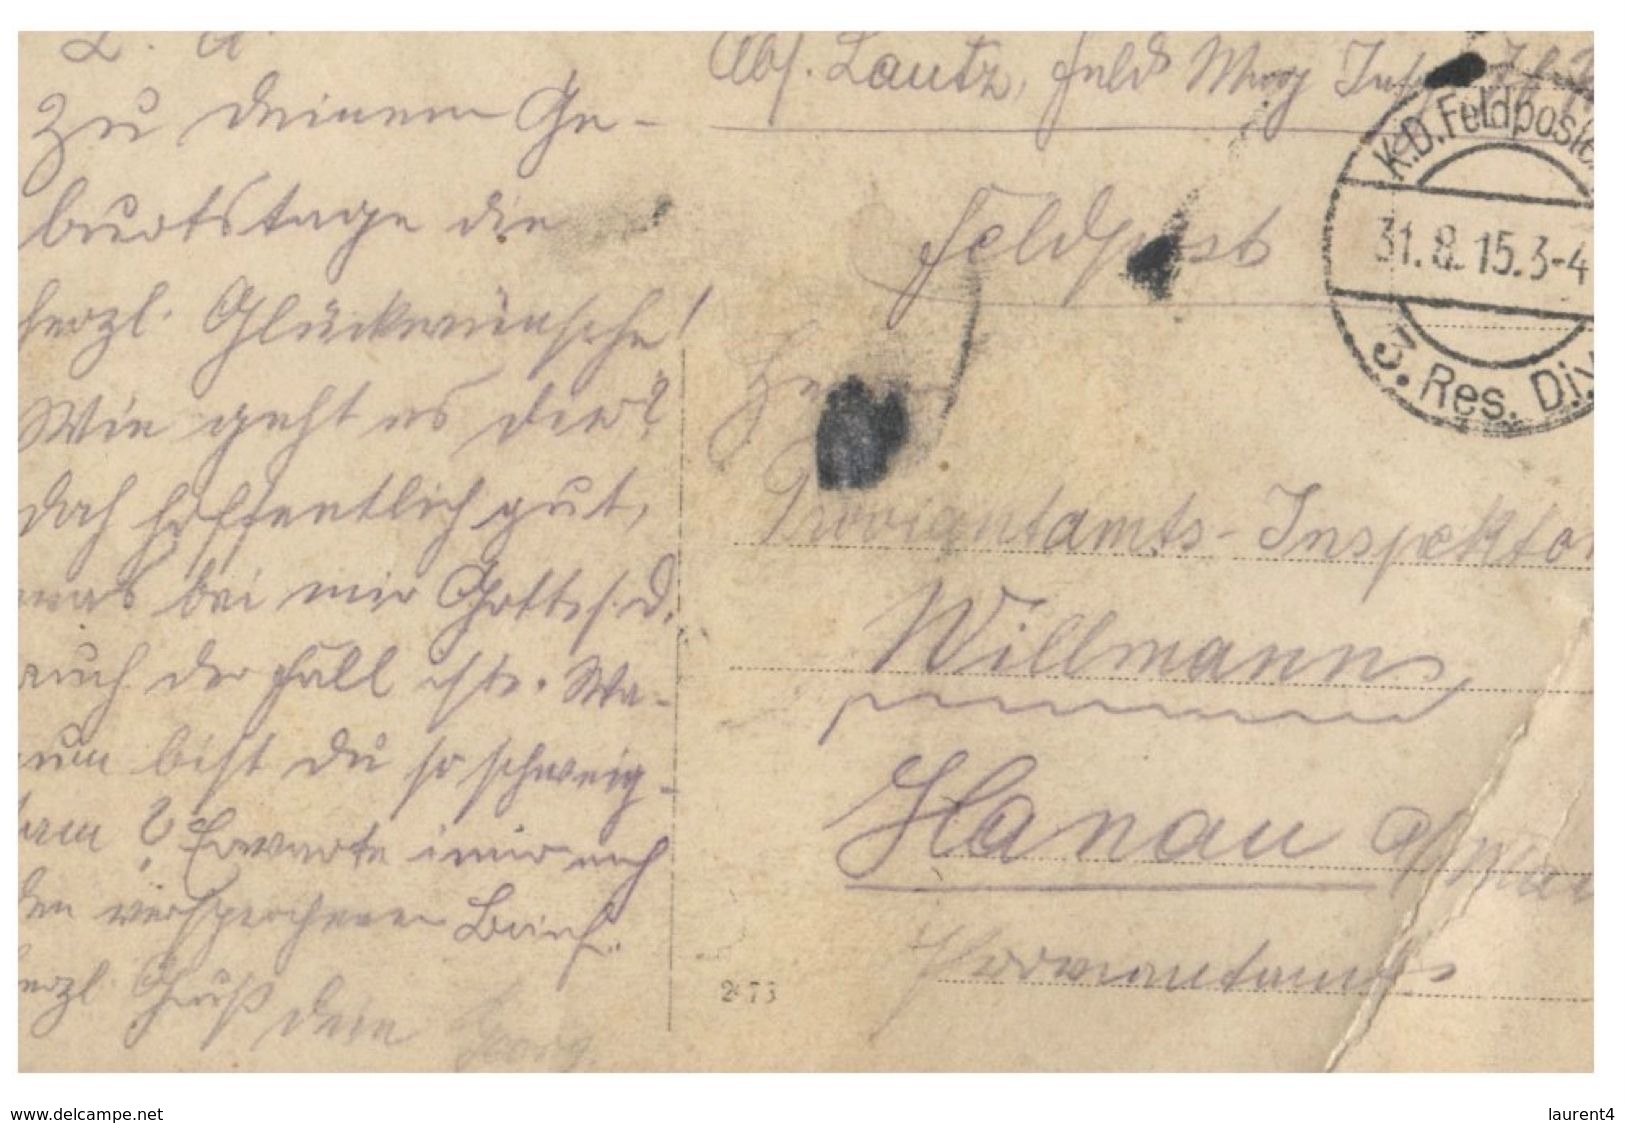 (PH 618) WWI - Feldpost  - Military German Mail - Postcard 1915 - Military Men And Horse - Militaria